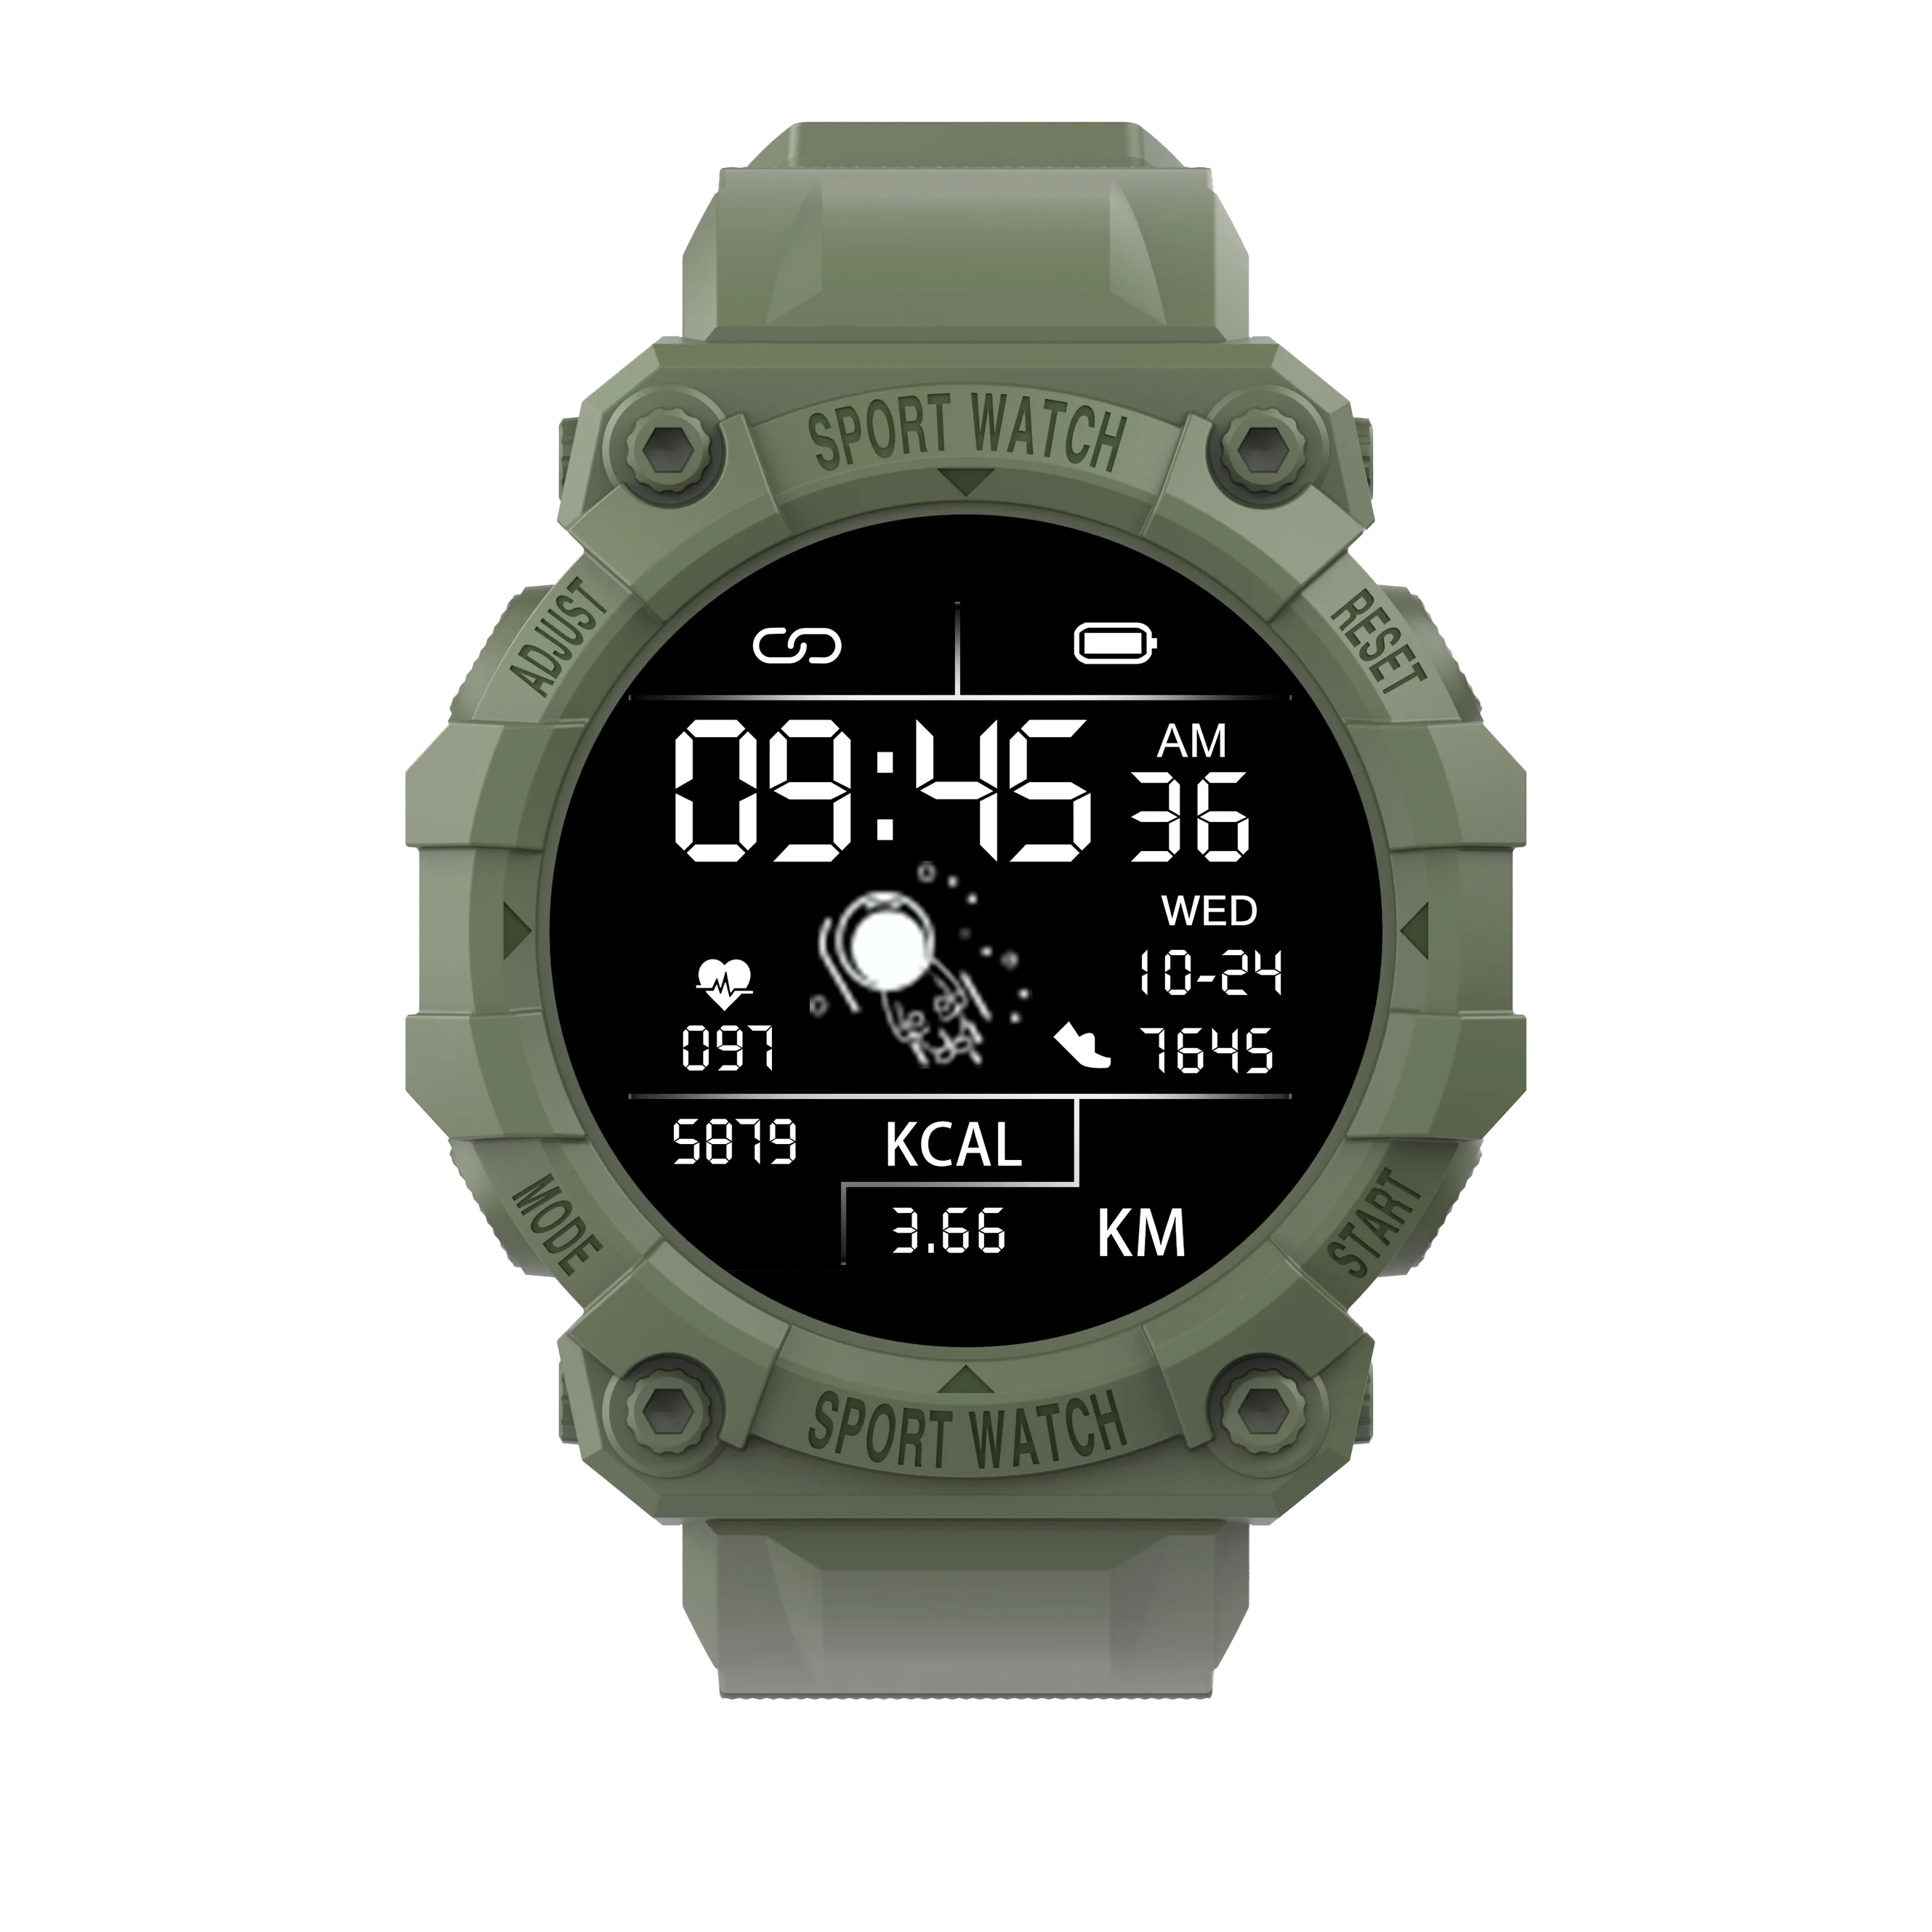 

New Arrivals FD68 Digital Watches Heart Rate Monitoring Fitness Clock Smartwatch IP67 Waterproof Smart Watch FD68 pk D20/Y68, Black, green, pink, red